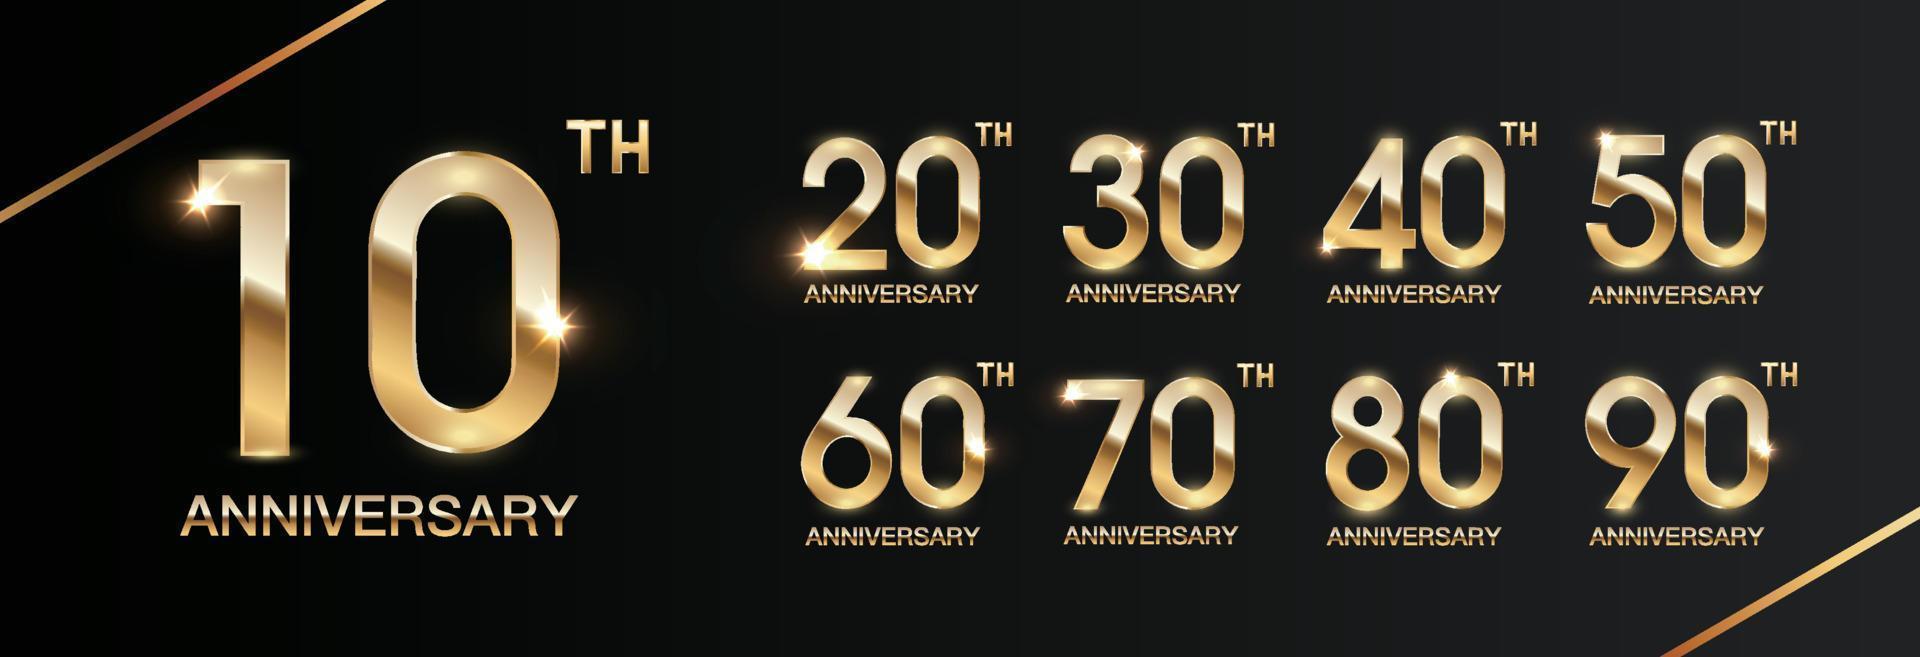 Set of anniversary celebration template design with golden text for anniversary celebration event. vector